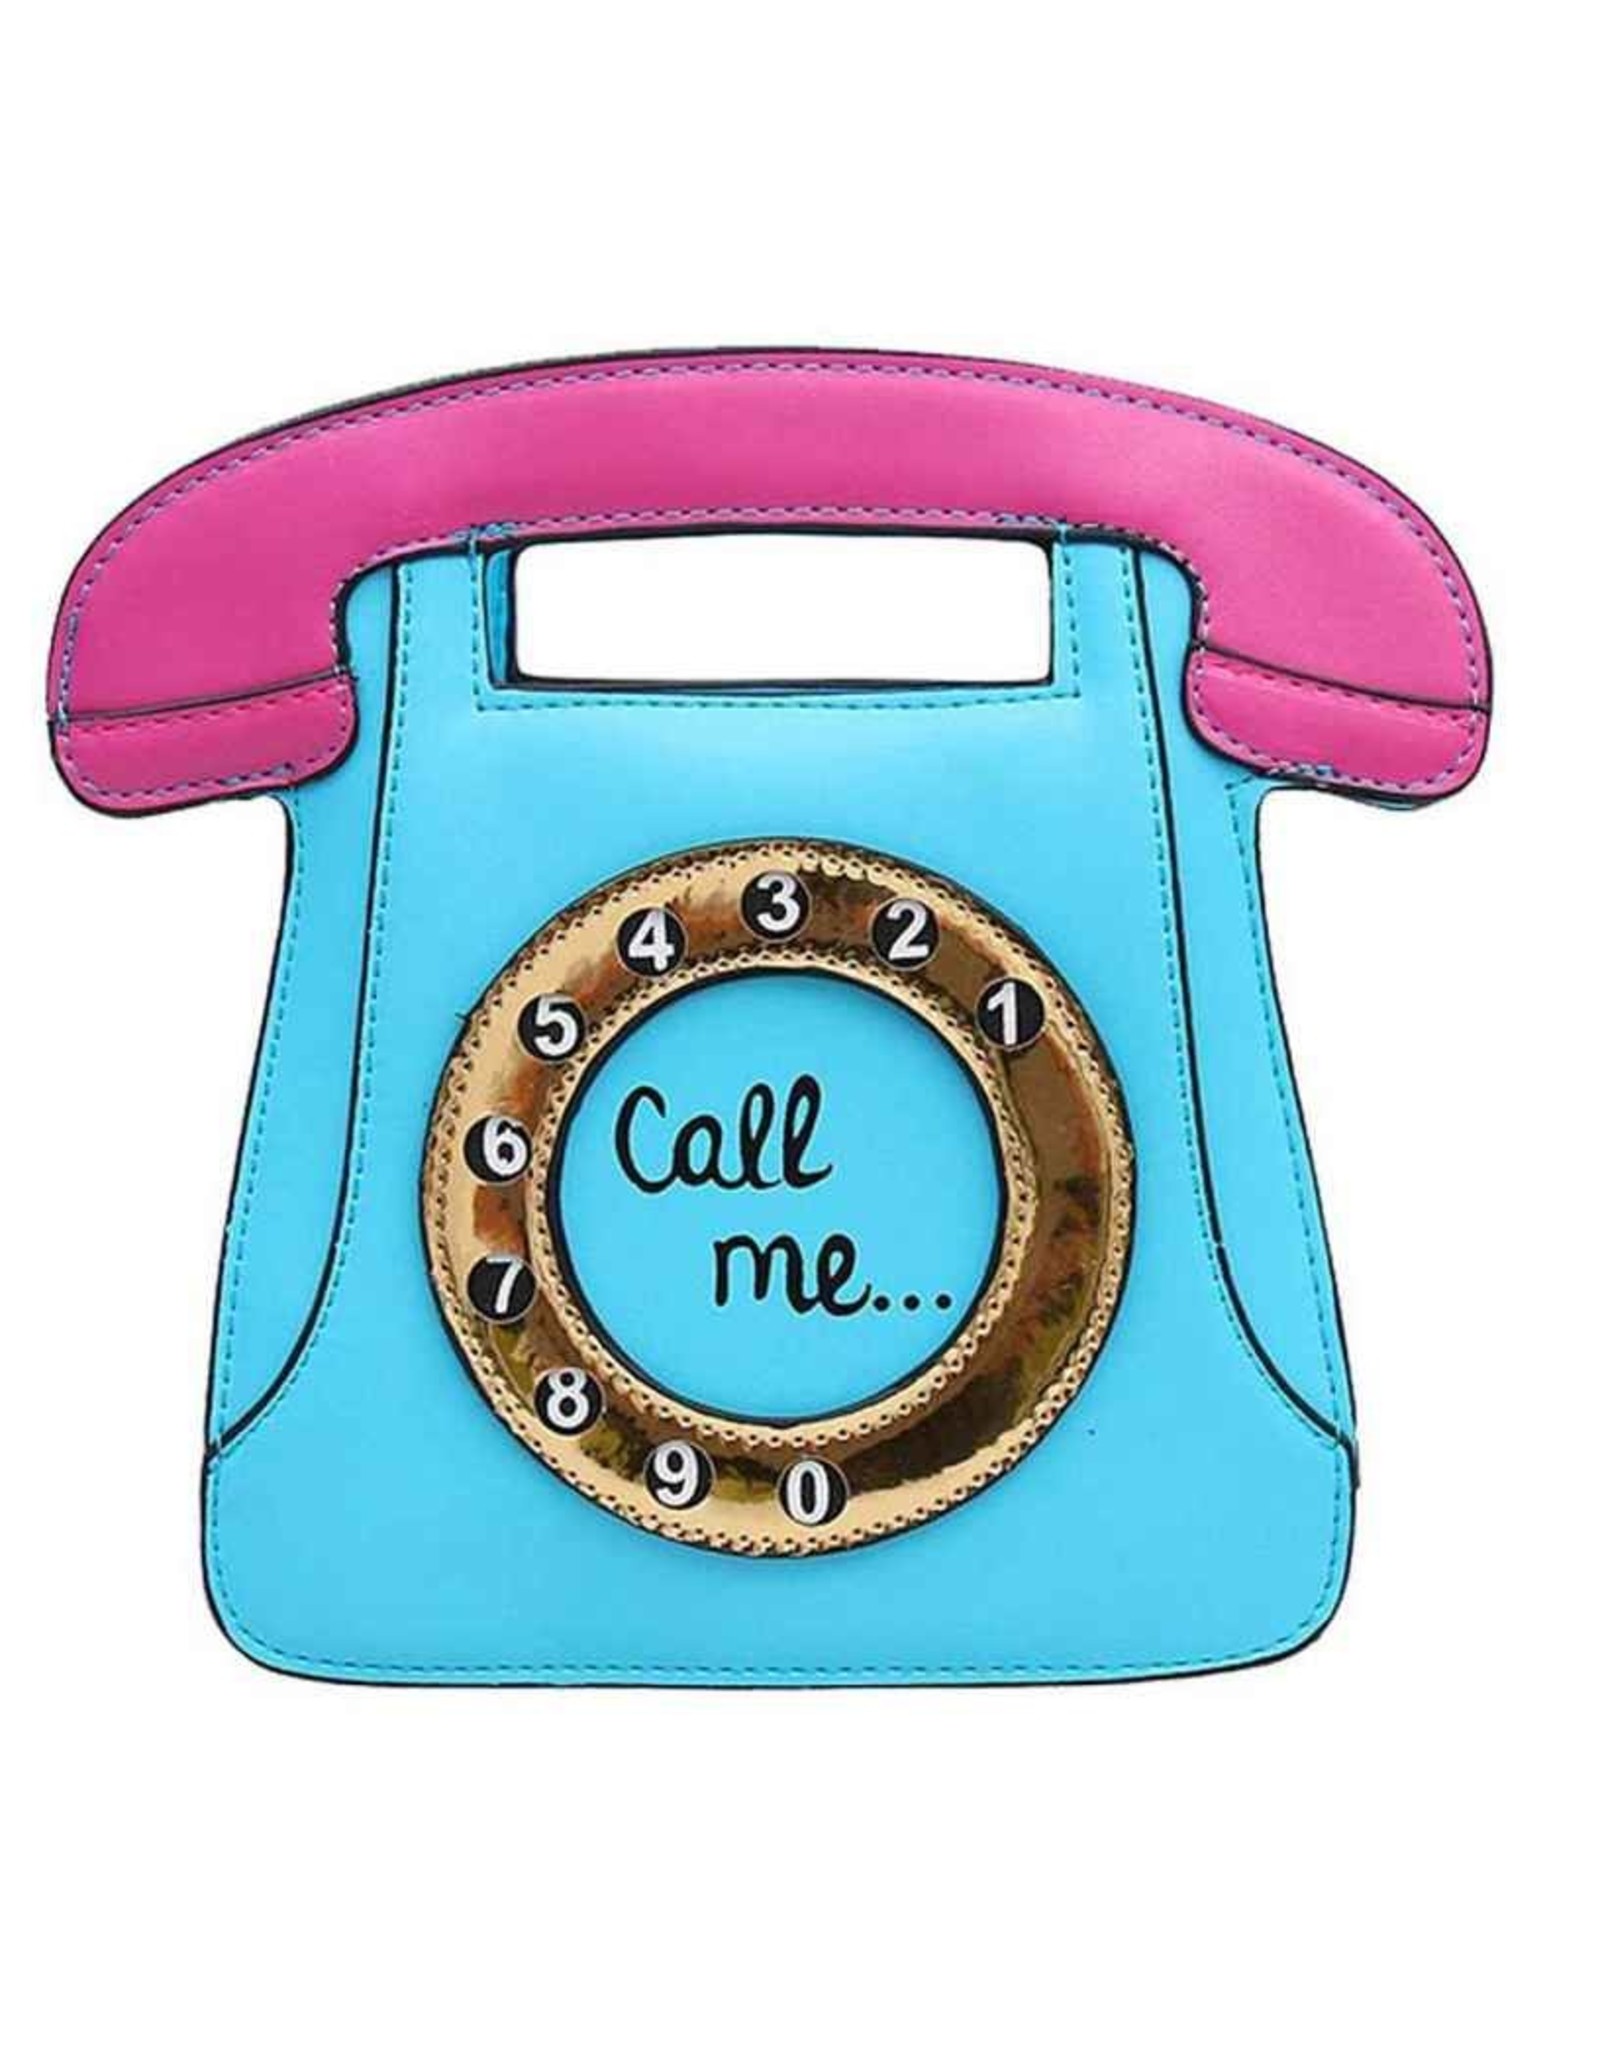 Magic Bags Fantasy bags and wallets - Fantasy hand bag Retro Telephone "Call Me" (baby blue)